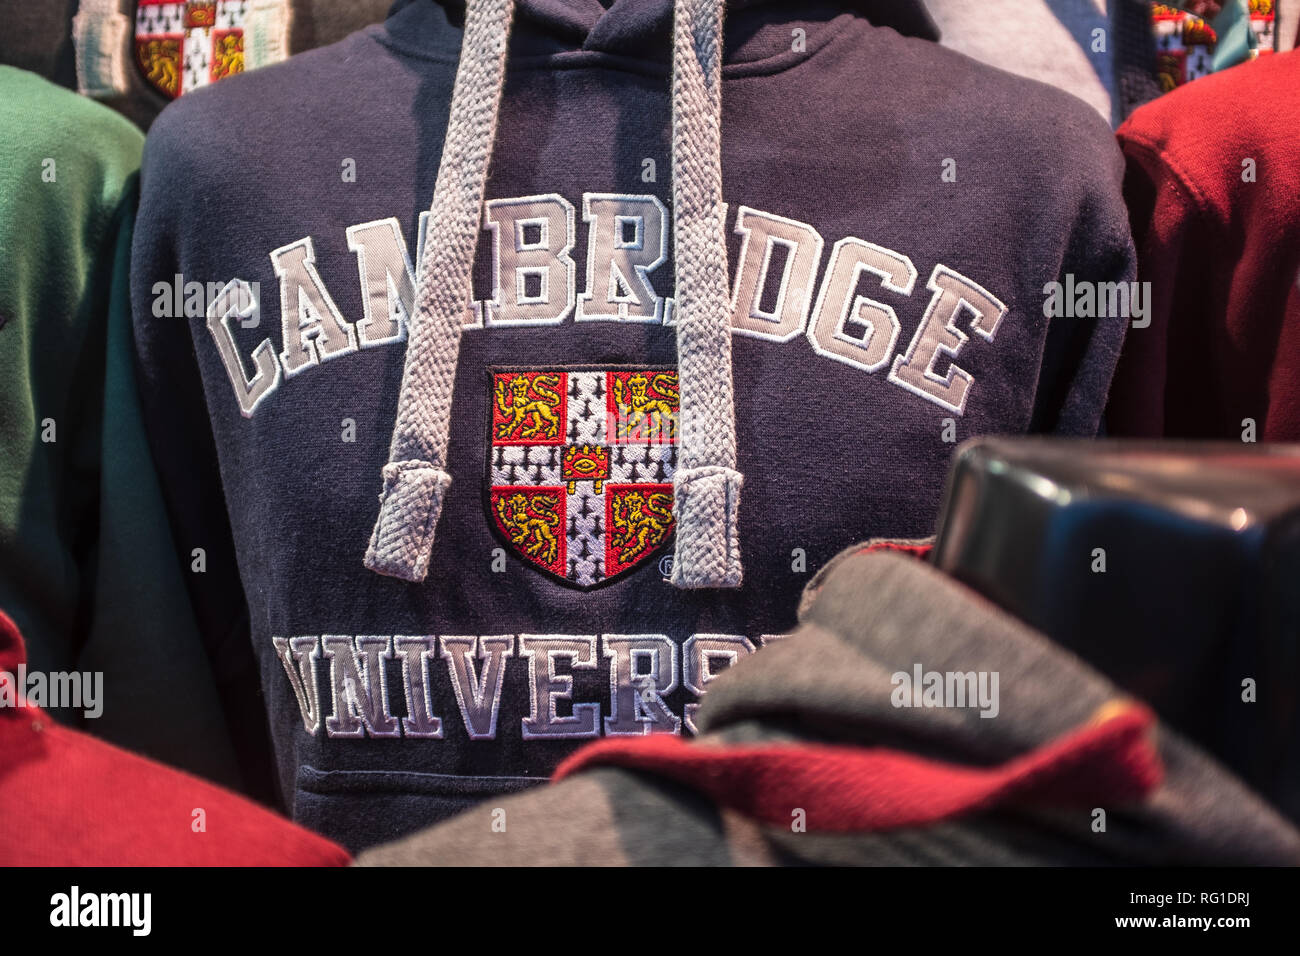 Cambridge University Clothing - University of Cambridge merchandise for sale in a show window in Central Cambridge UK Stock Photo